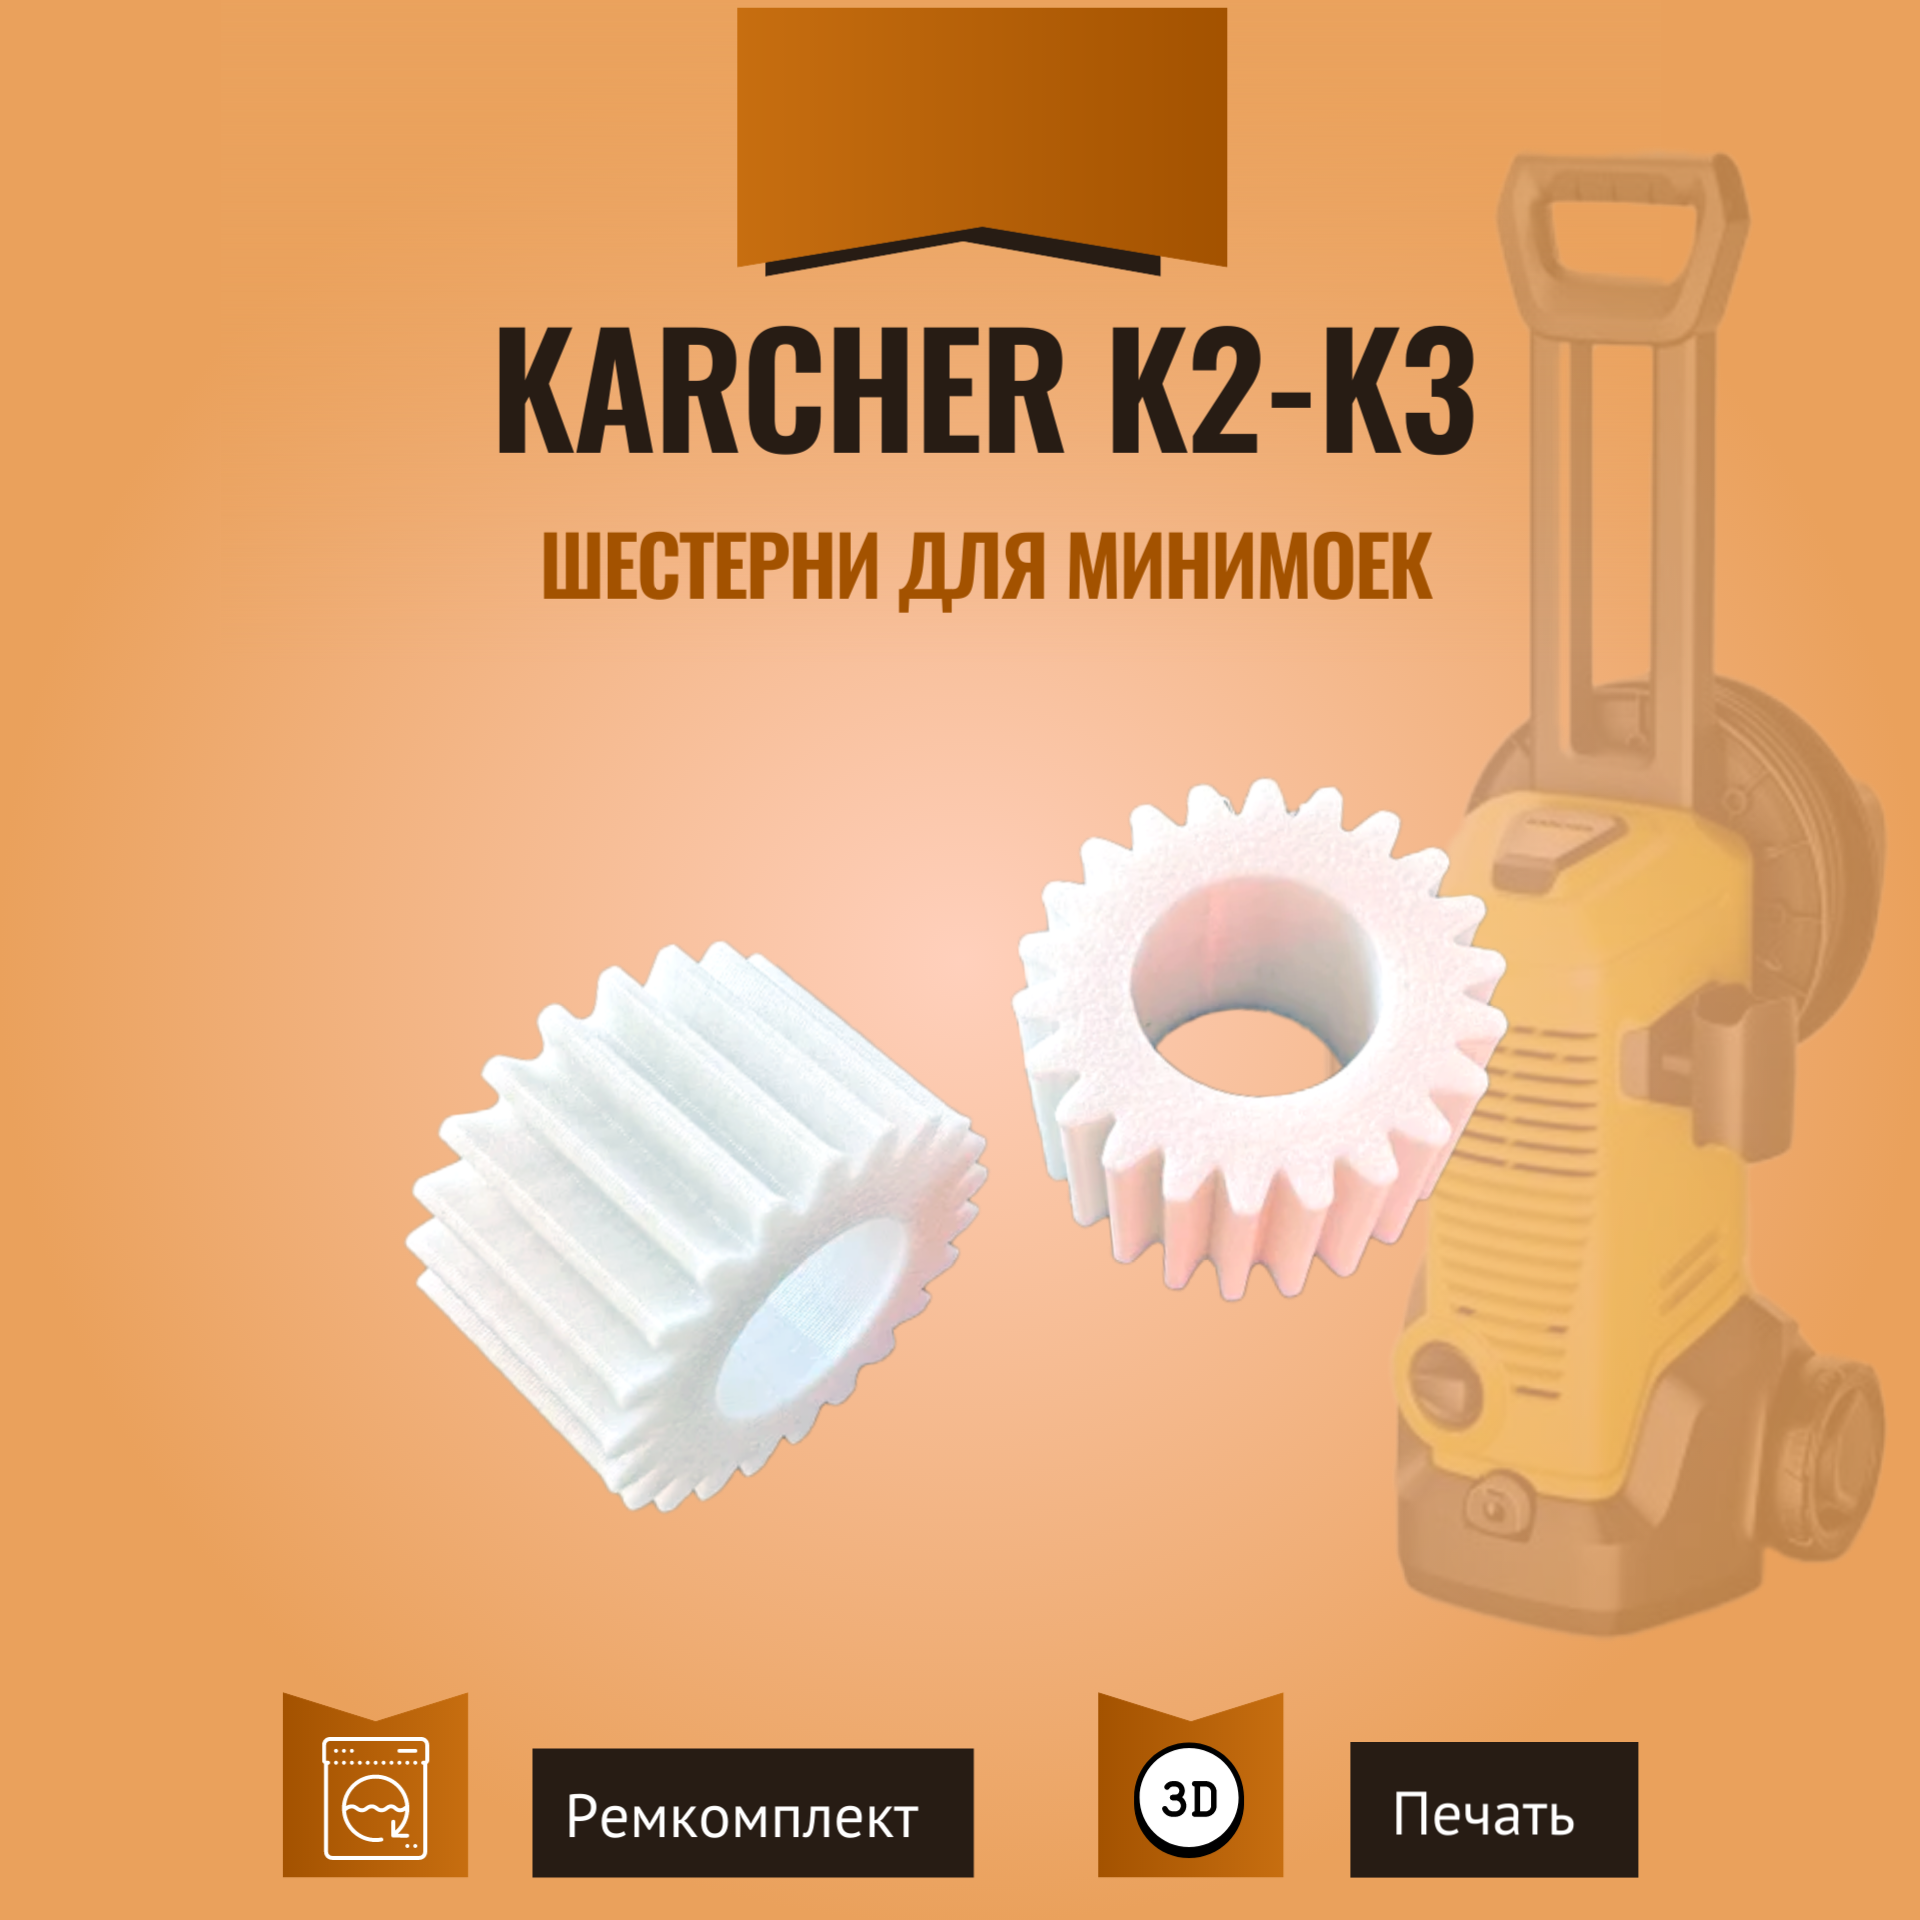 Шестерни для минимоек Karcher серии K2-K3, 2 шт